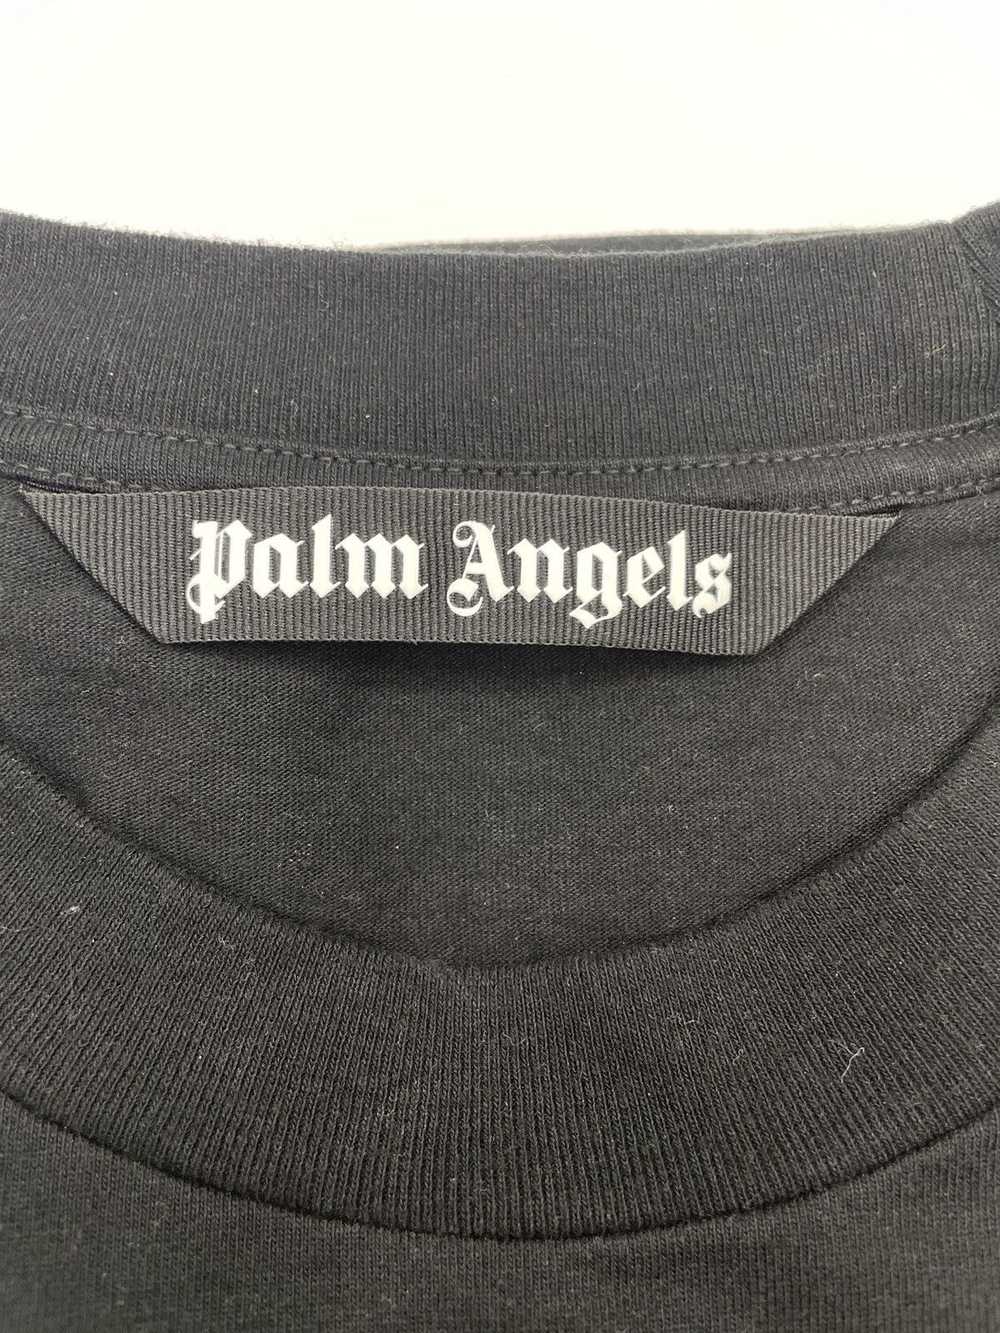 Palm Angels PALM ANGELES - image 5